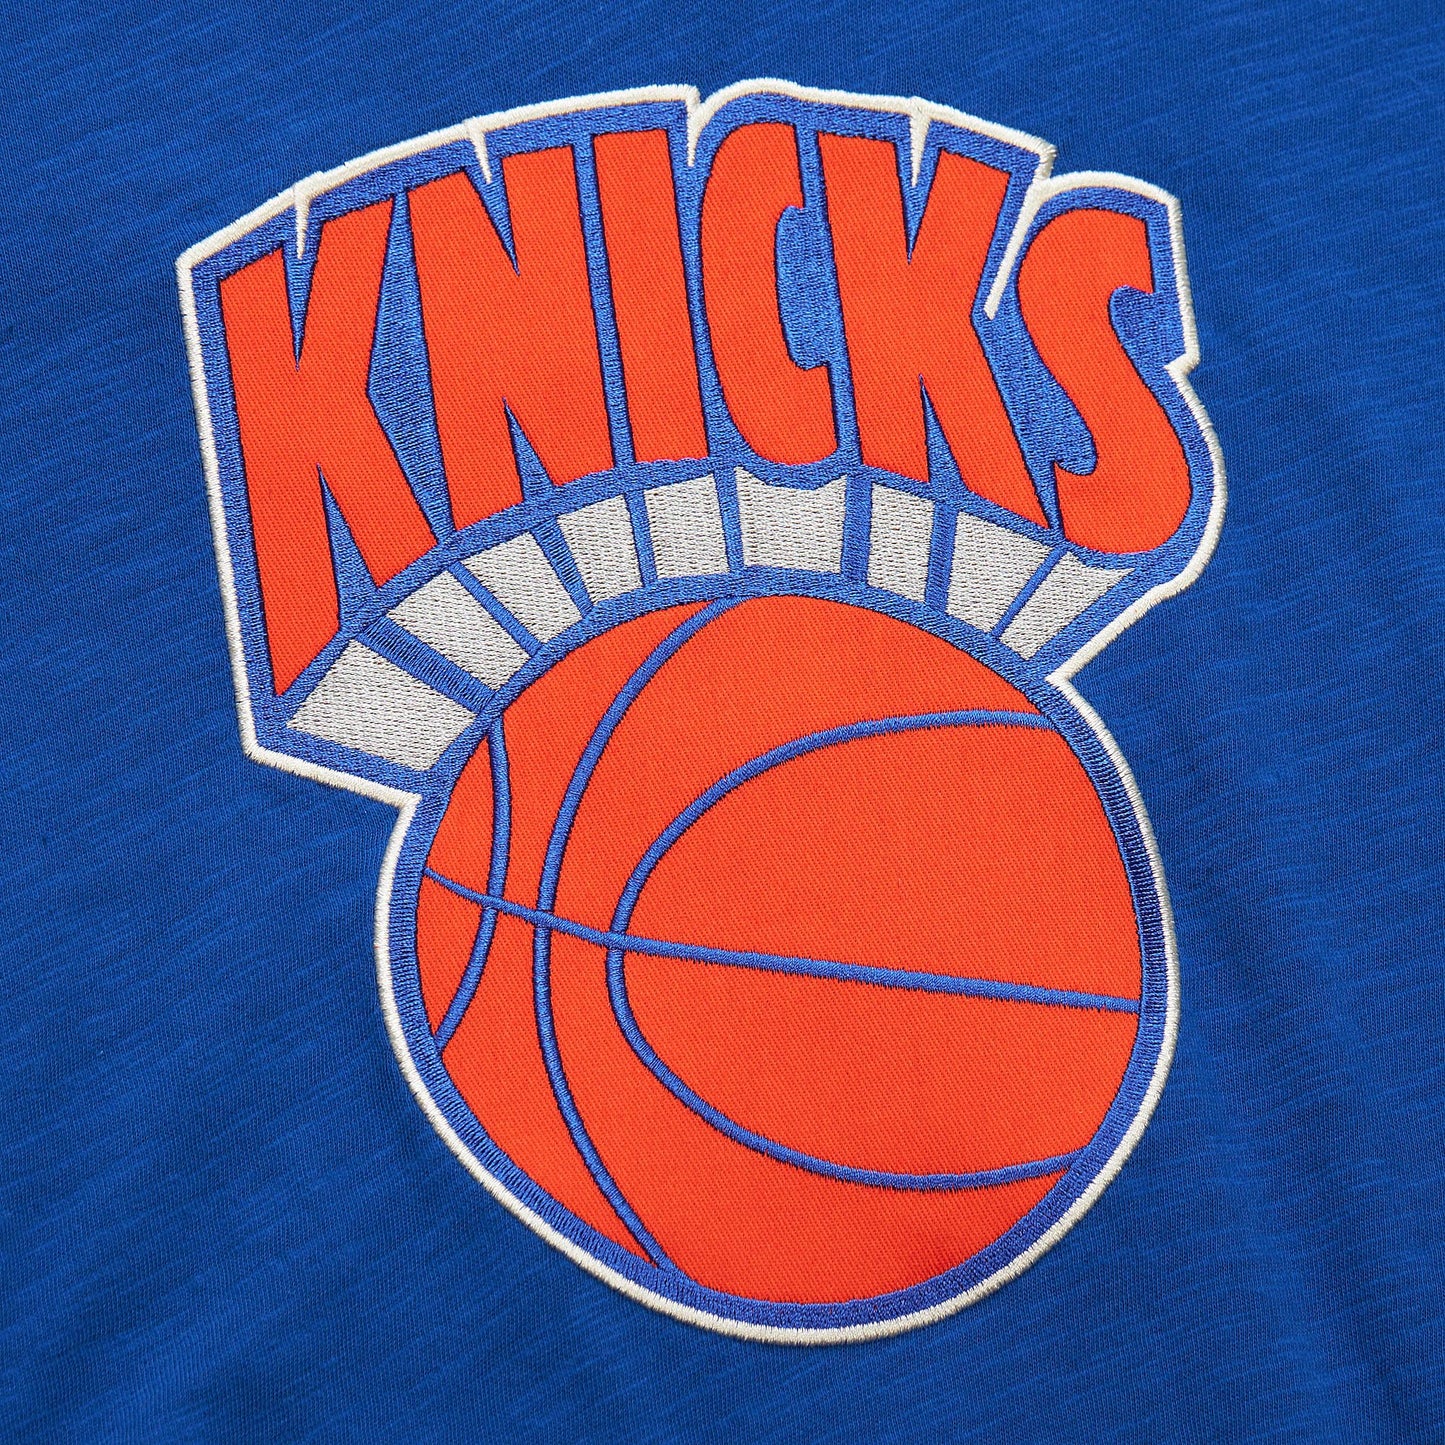 New York Knicks Mitchell & Ness Legendary Vintage Slub Hoodie